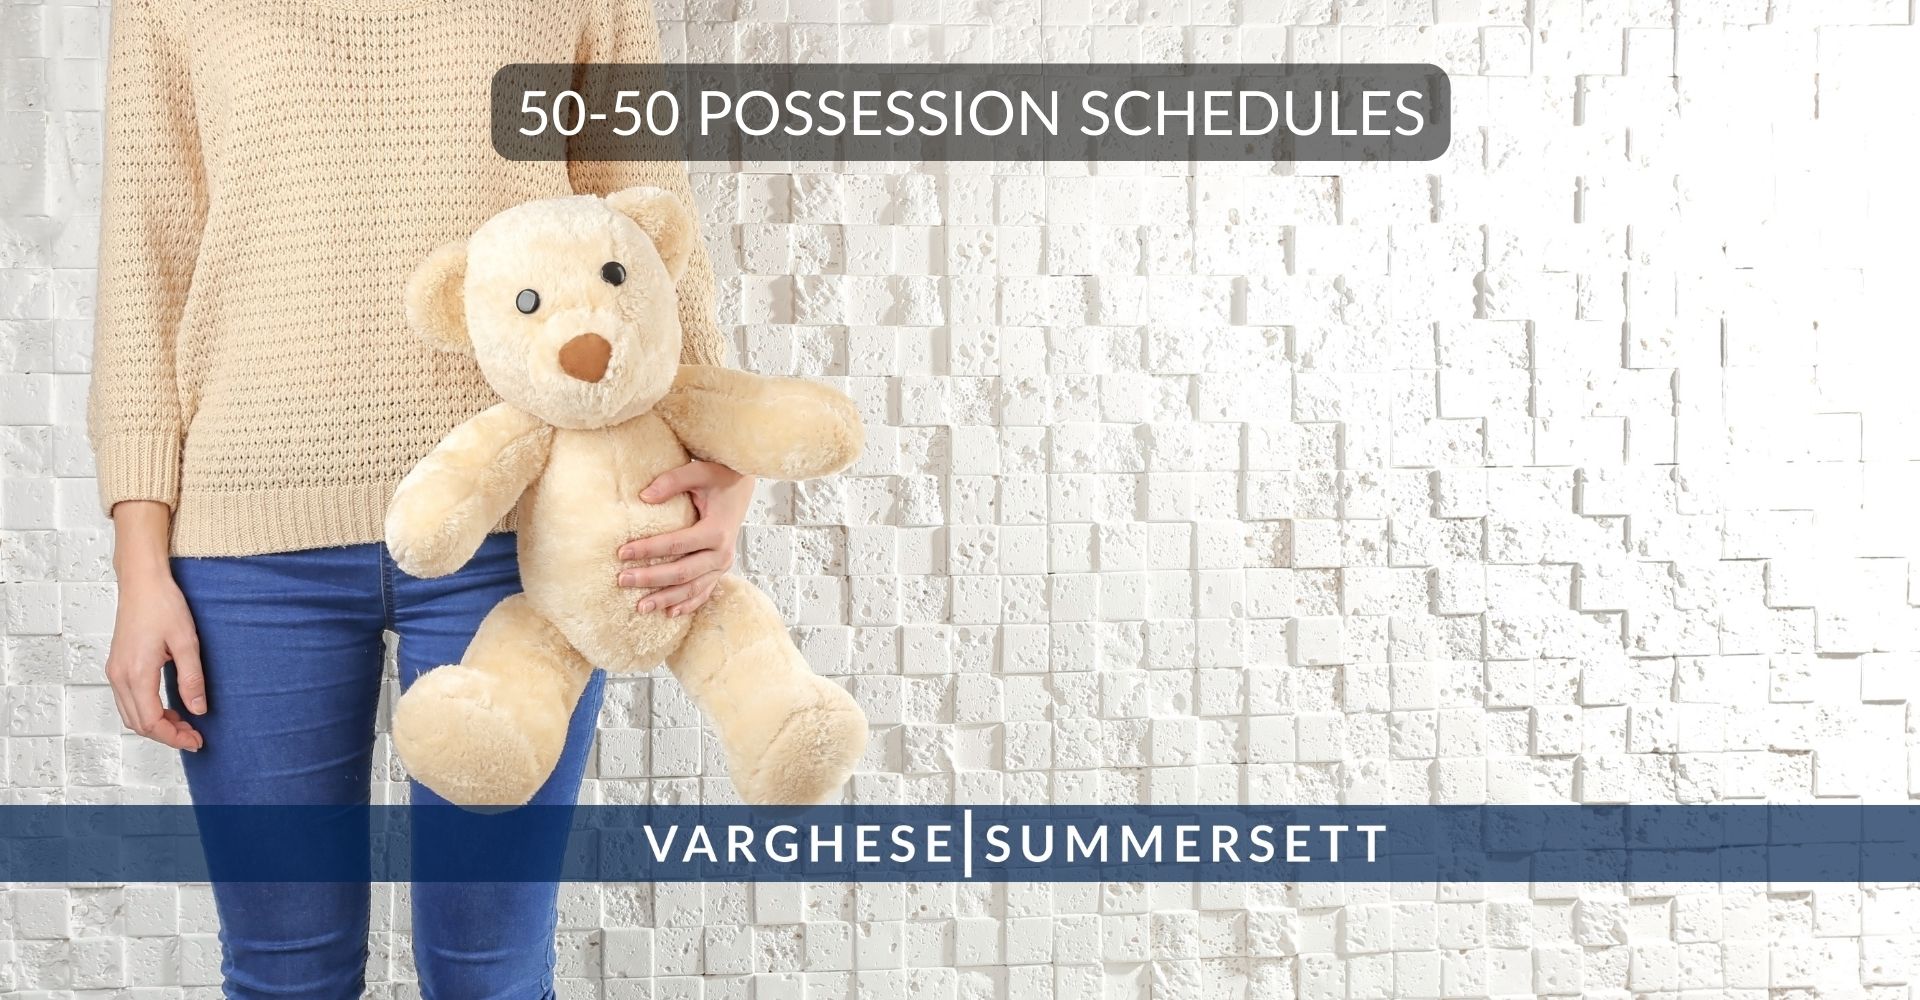 50-50 possession schedules